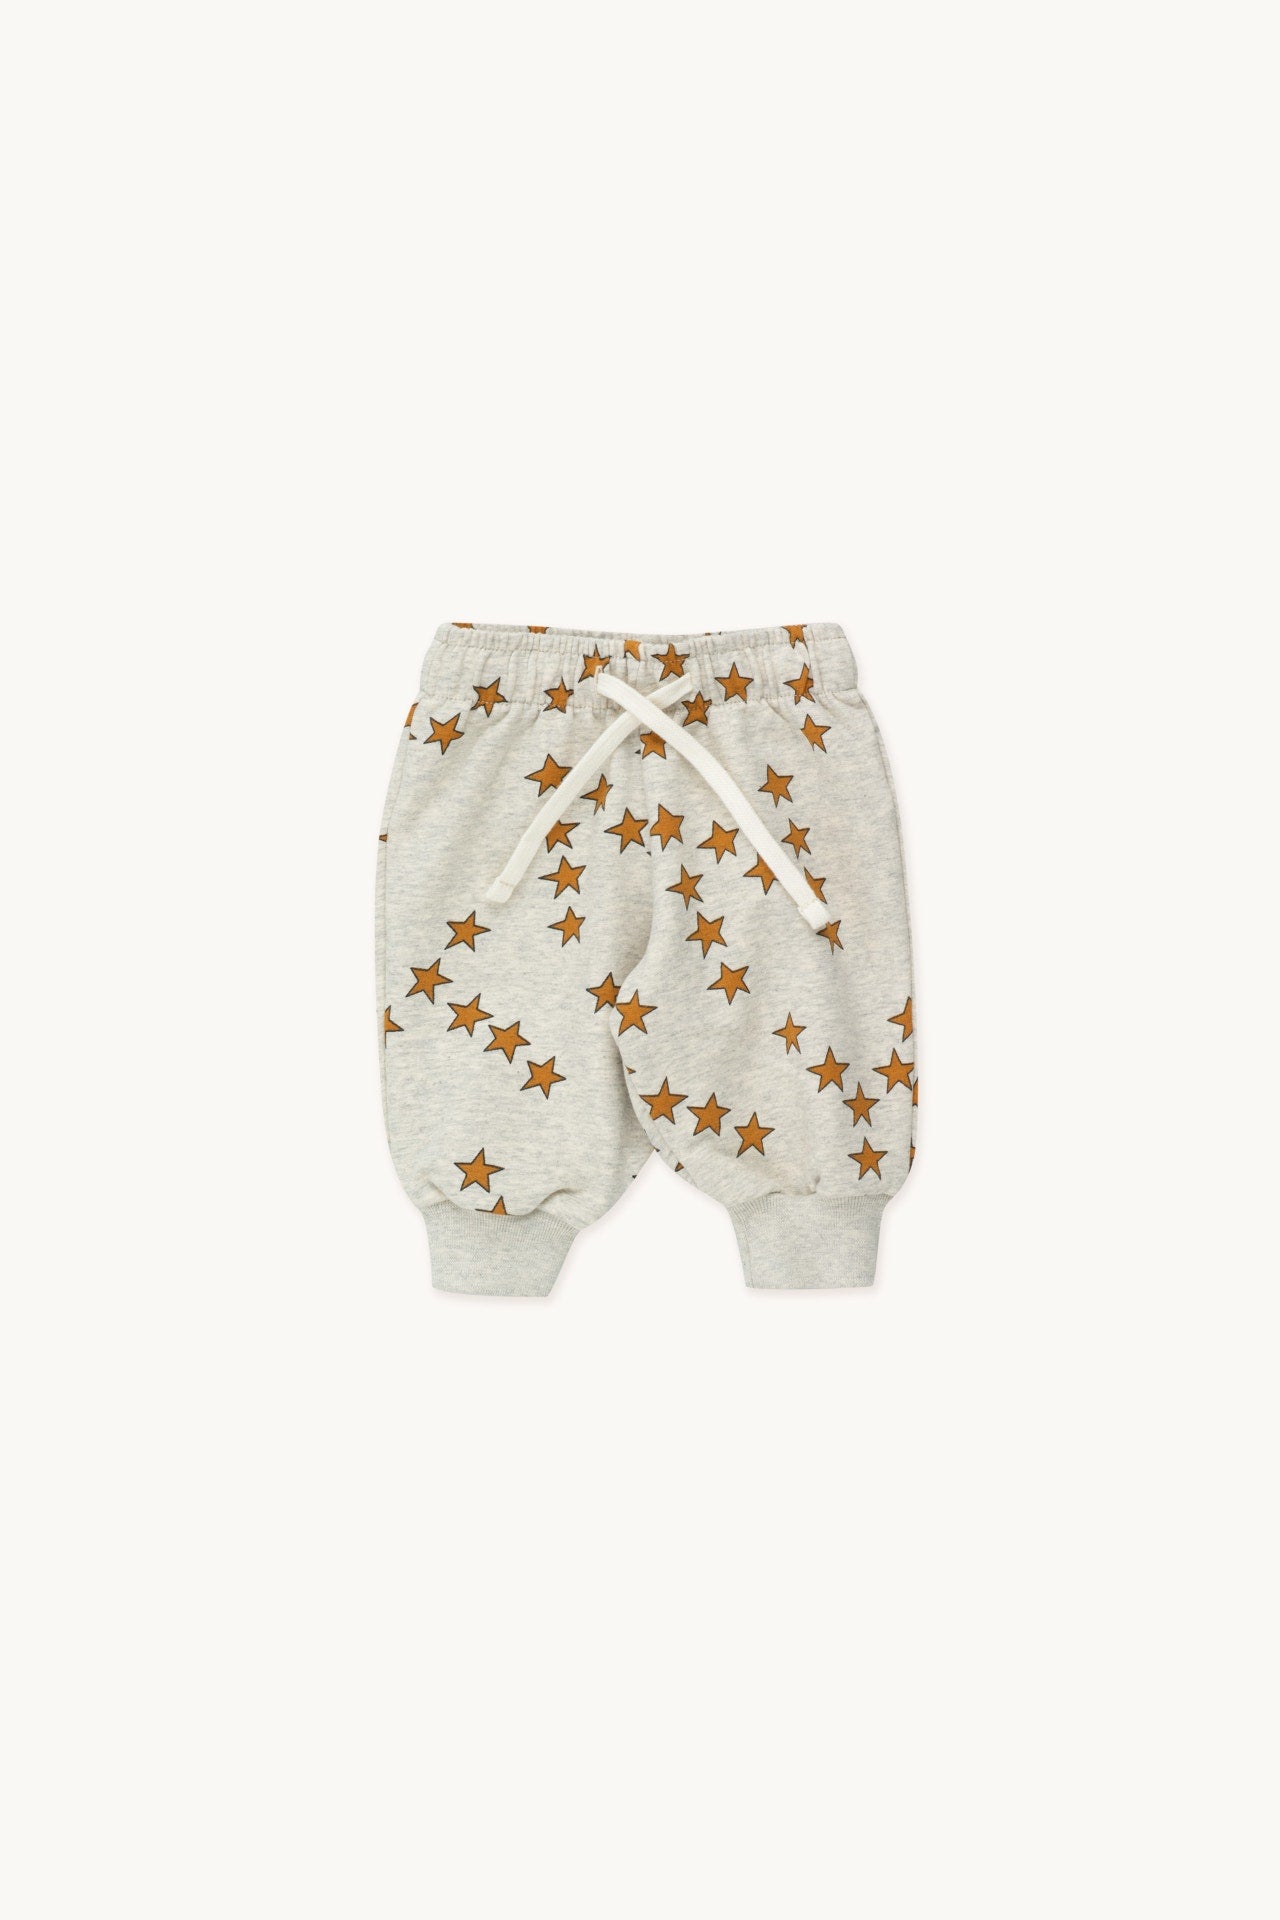 Tiny Cottons Tiny Stars Baby Sweatpants - Light Grey